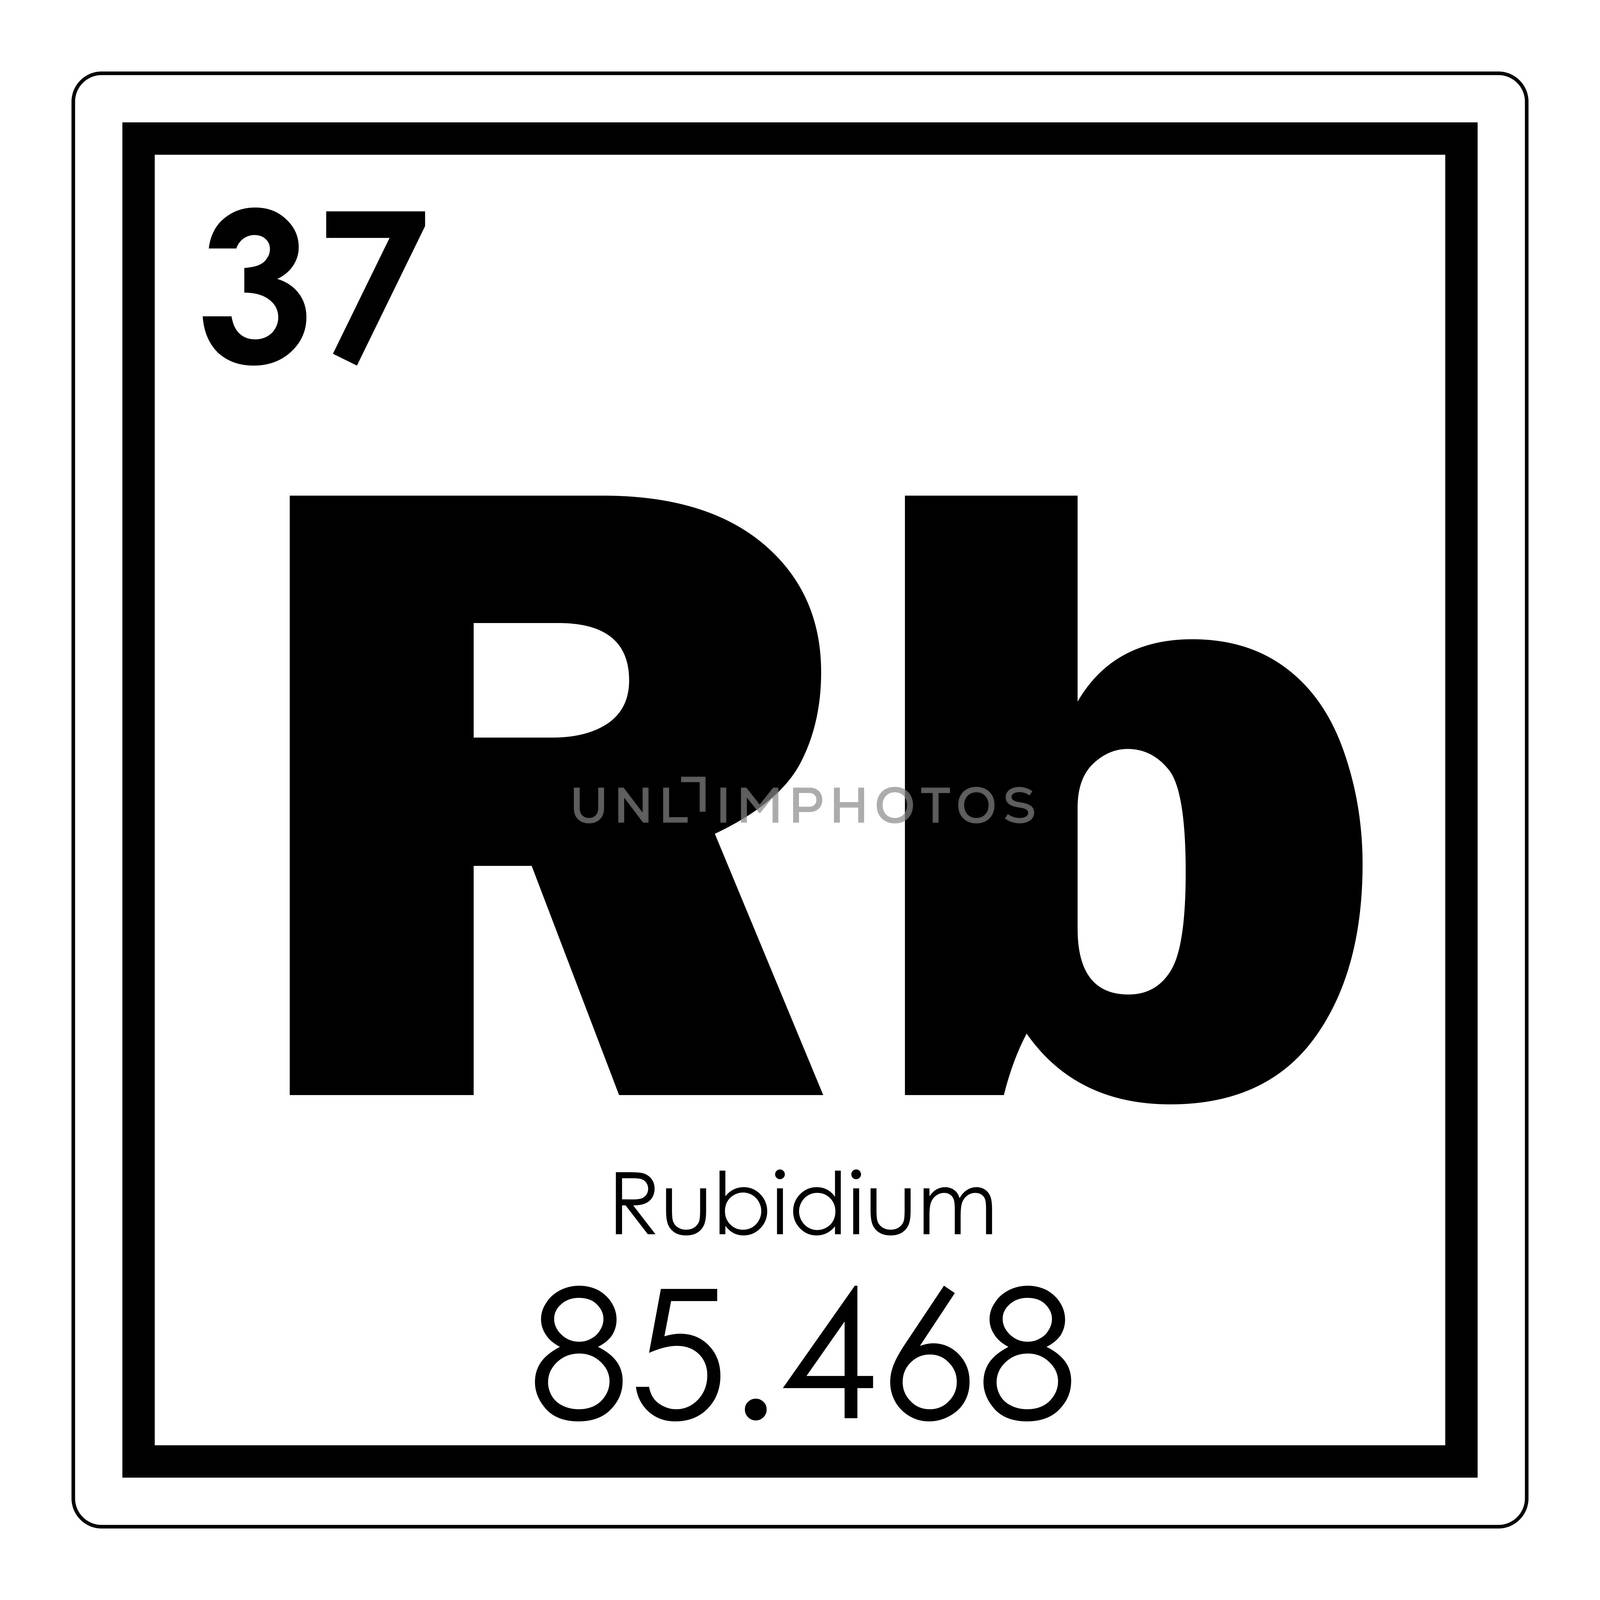 Rubidium chemical element by tony4urban